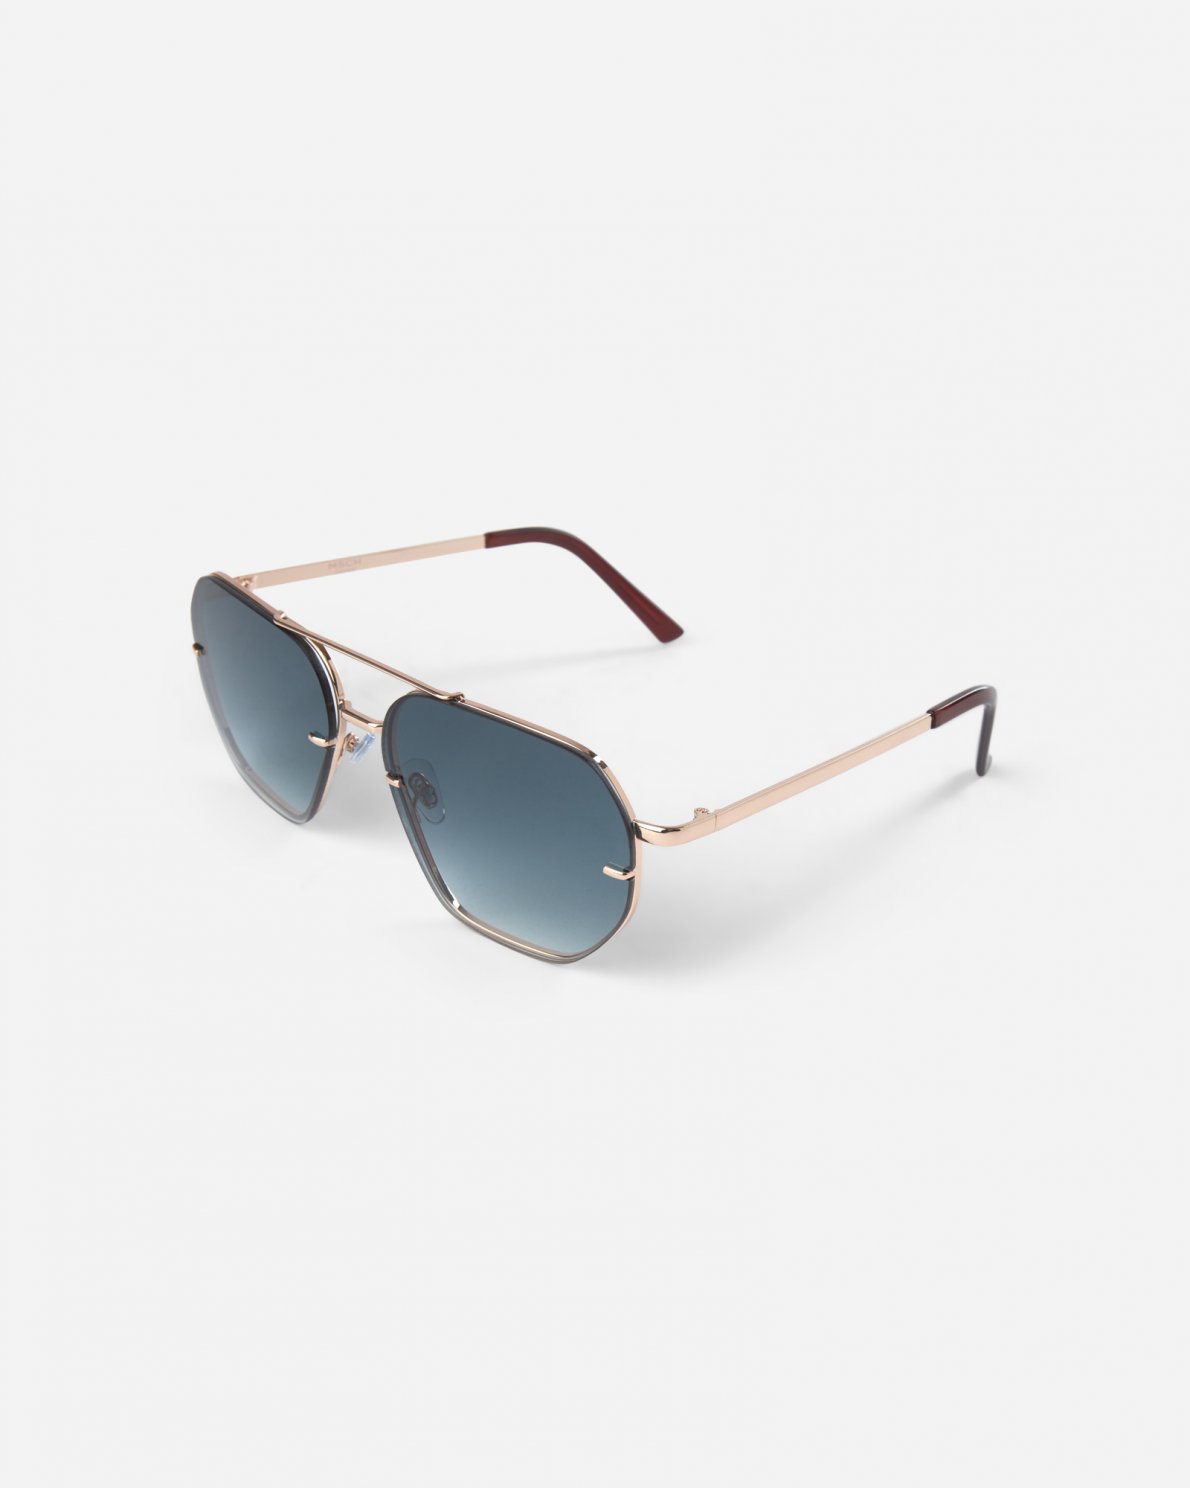 Accessories - Moss Copenhagen - Cathrine Sunglasses